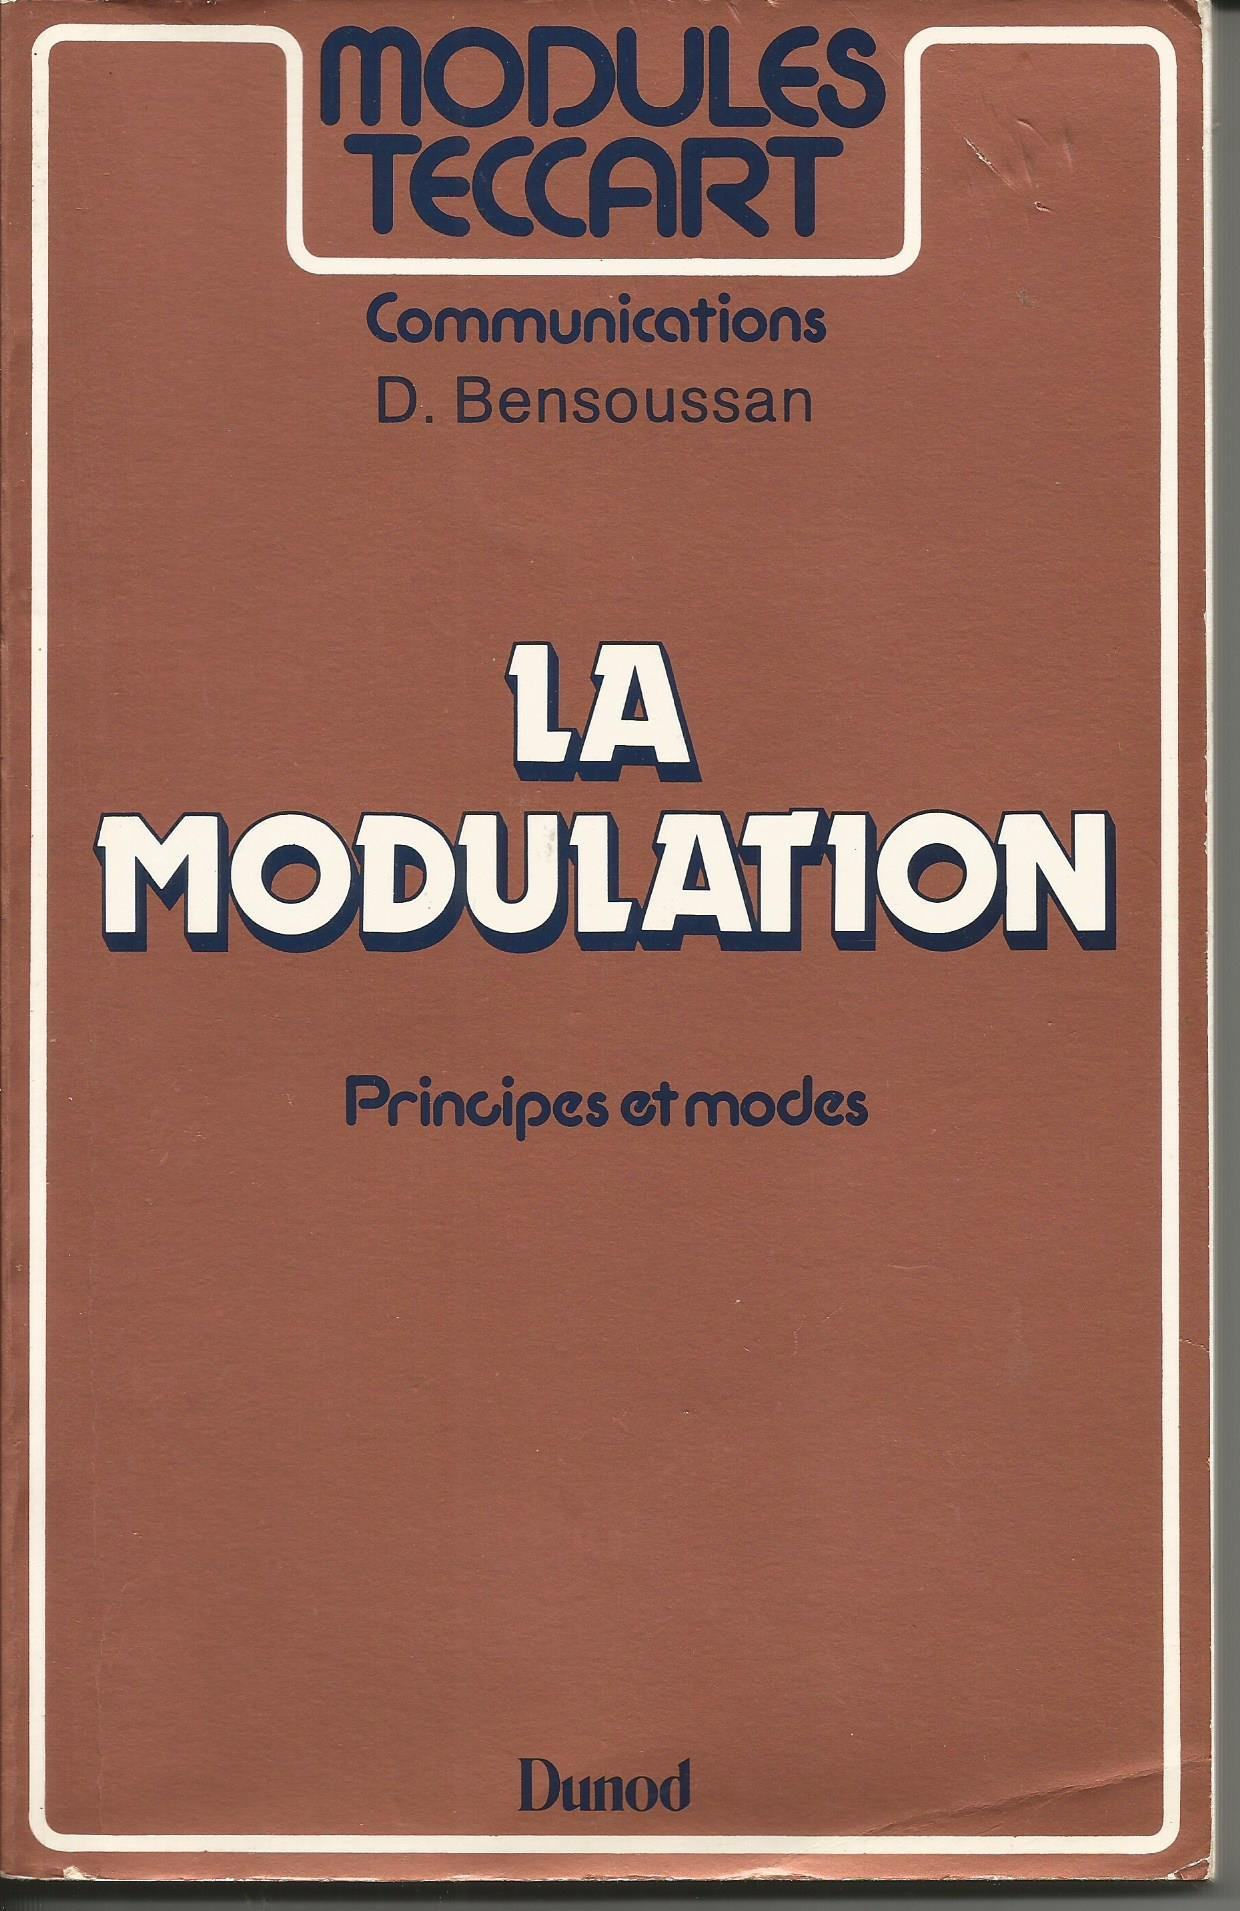 La modulation